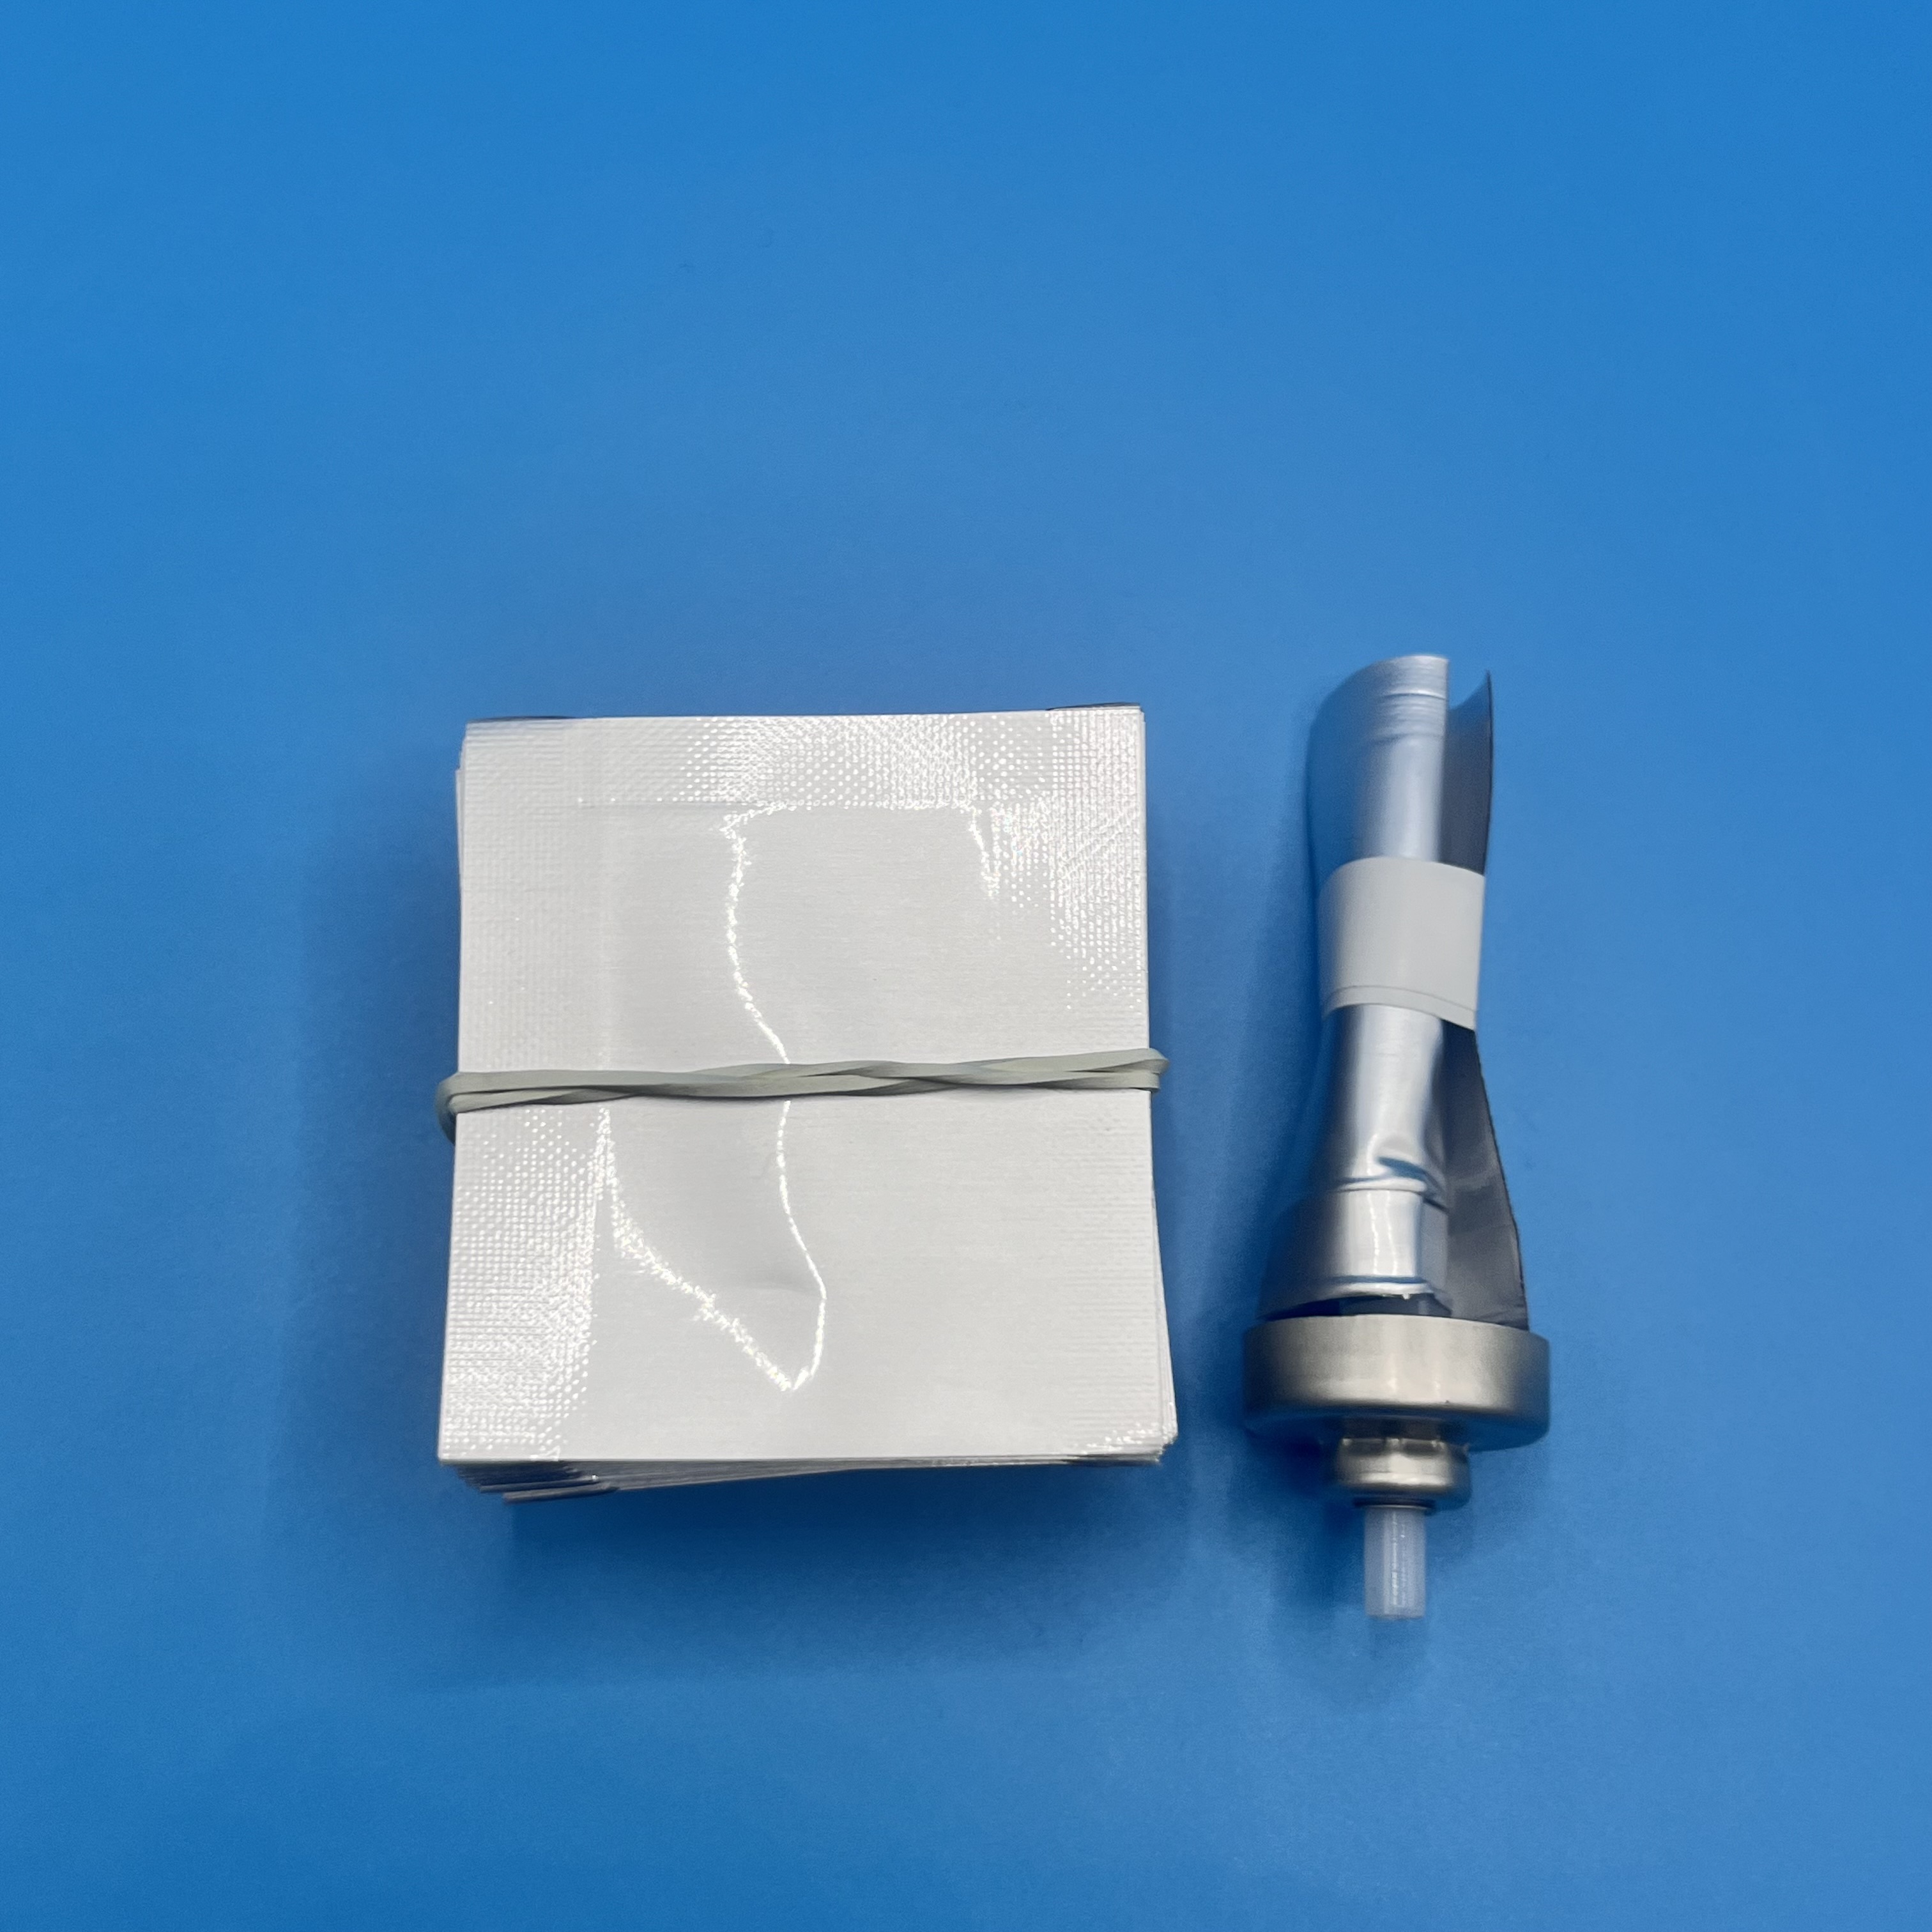 Prilagodljiva vrečka na embalaži ventila za prilagojene rešitve